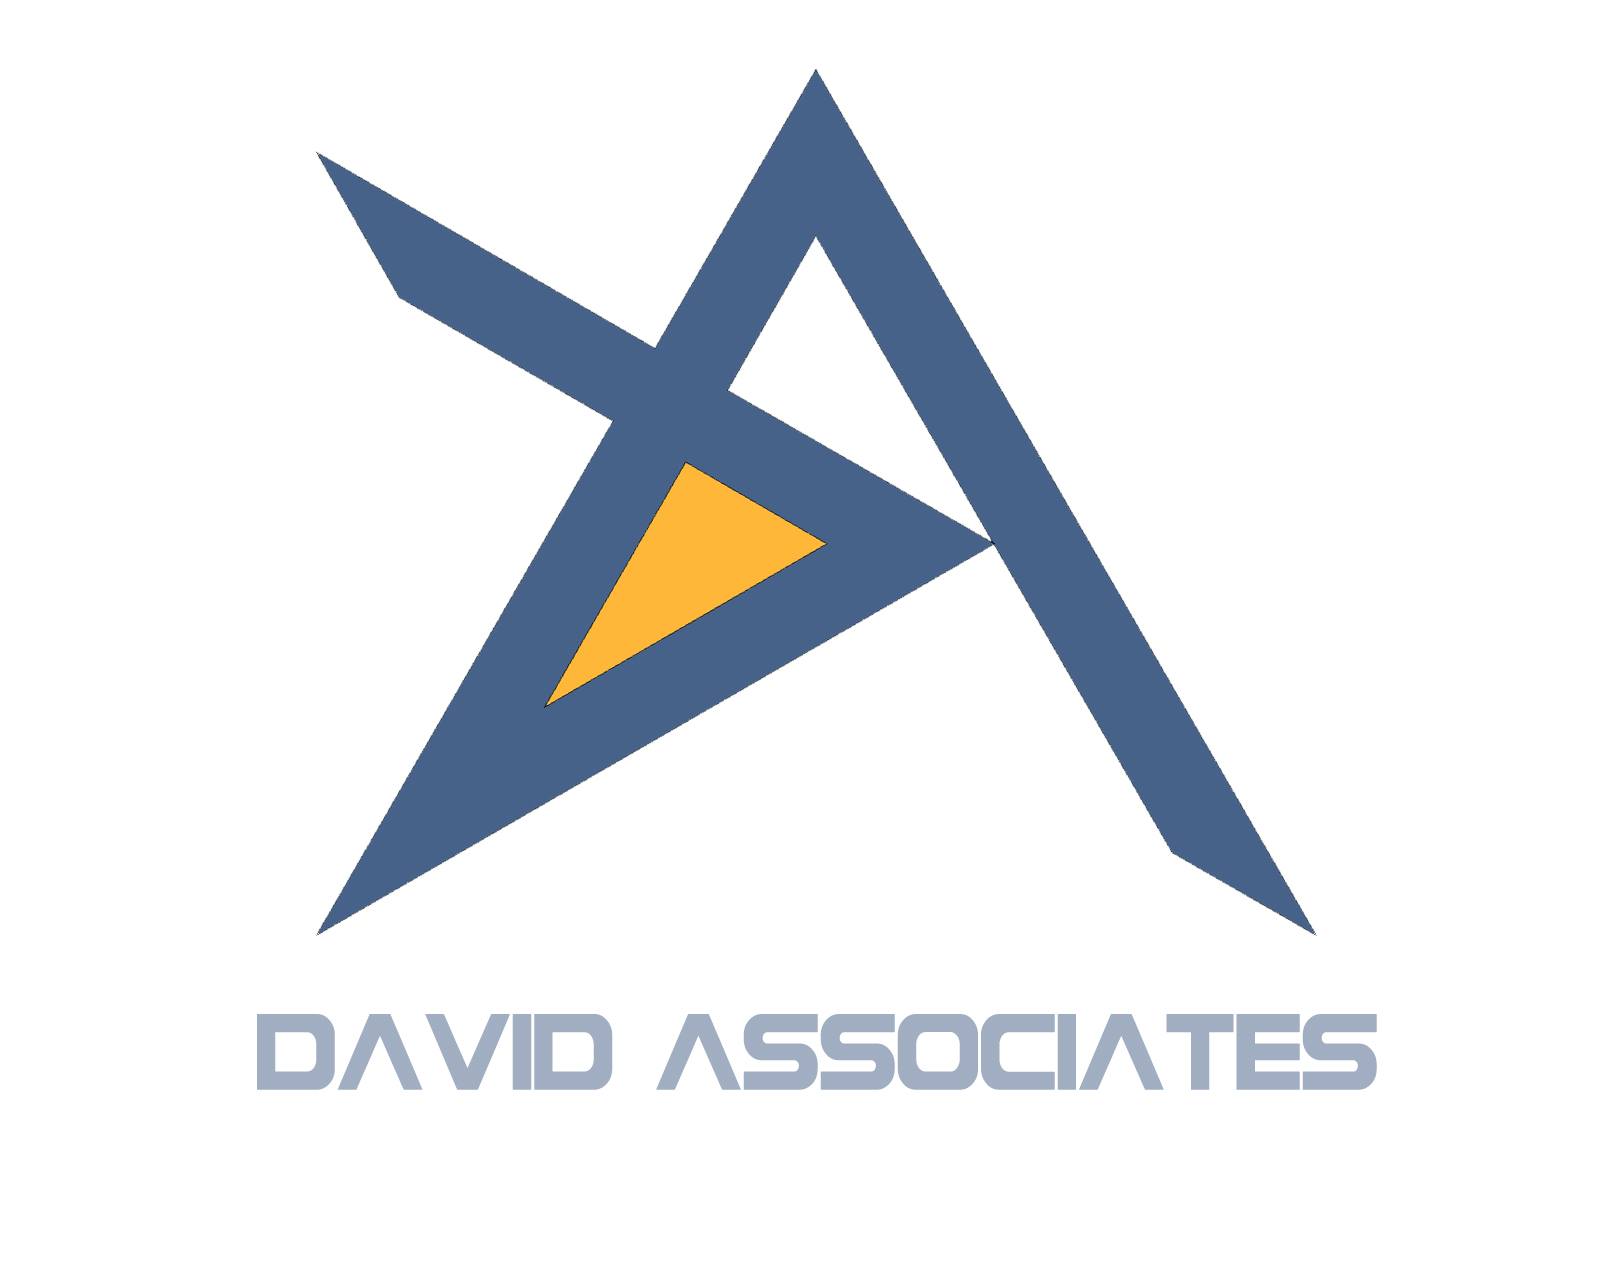 David Associates|Architect|Professional Services